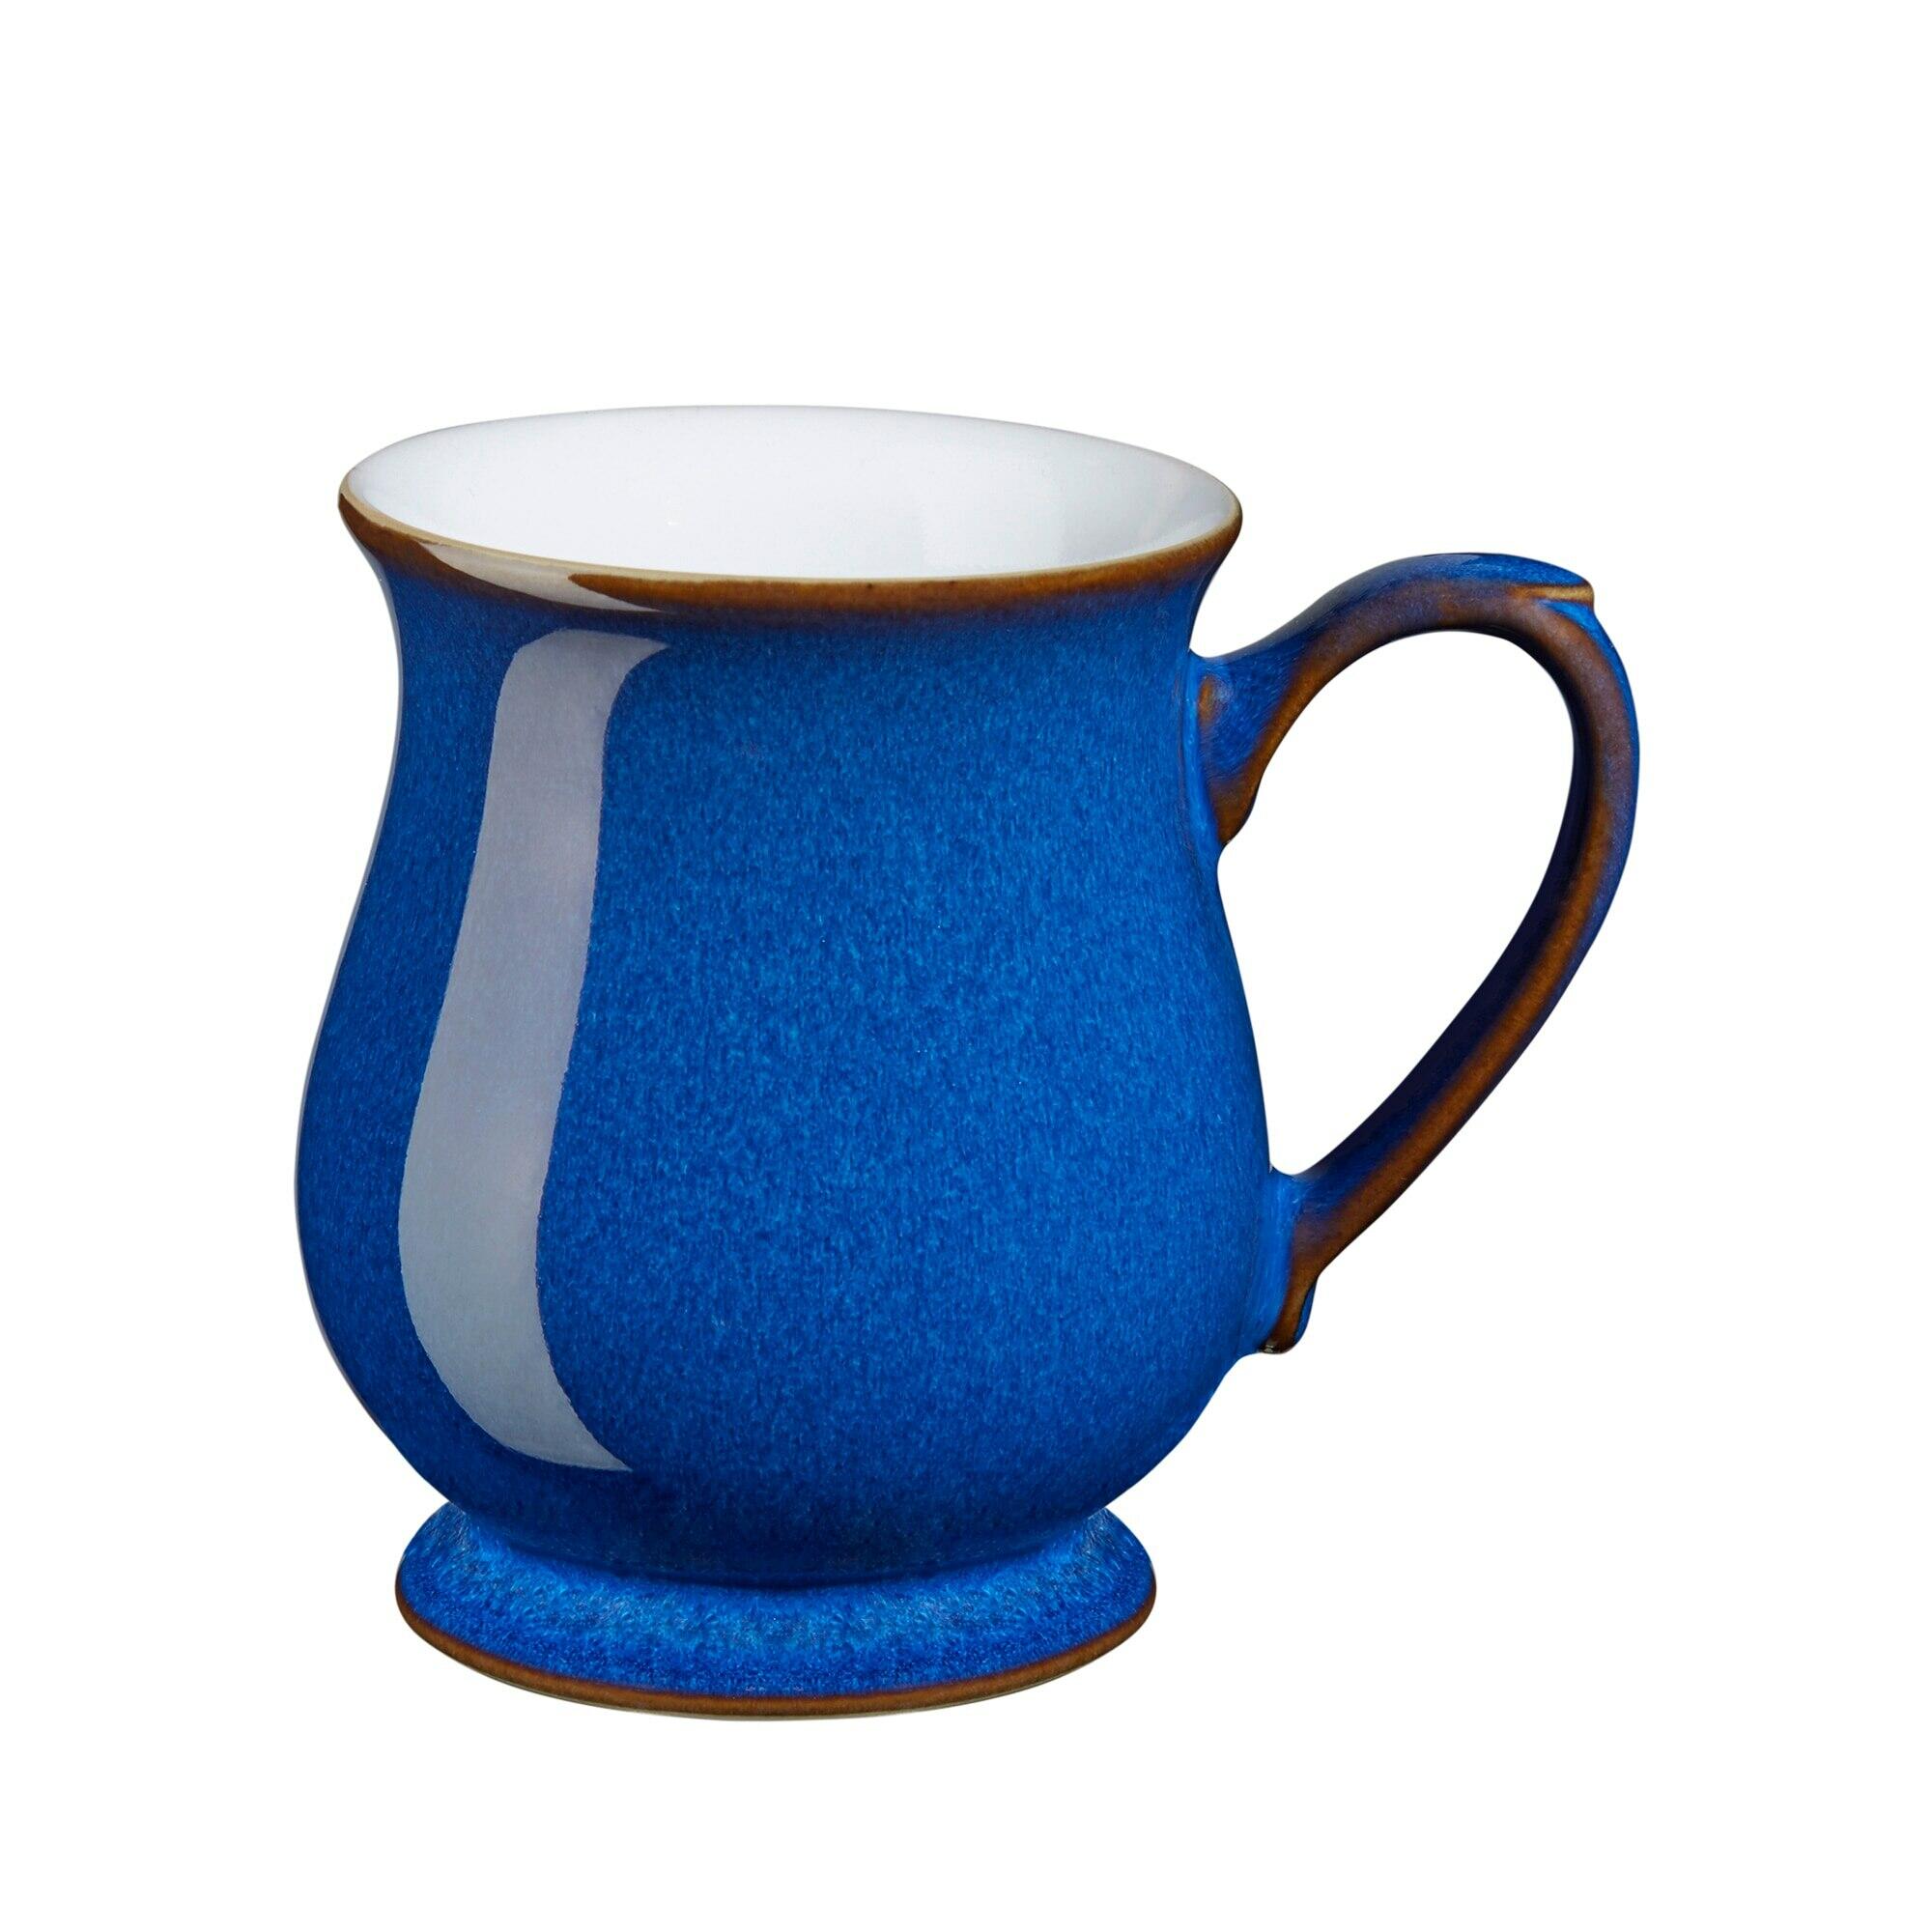 Imperial Blue Craftsman's Mug